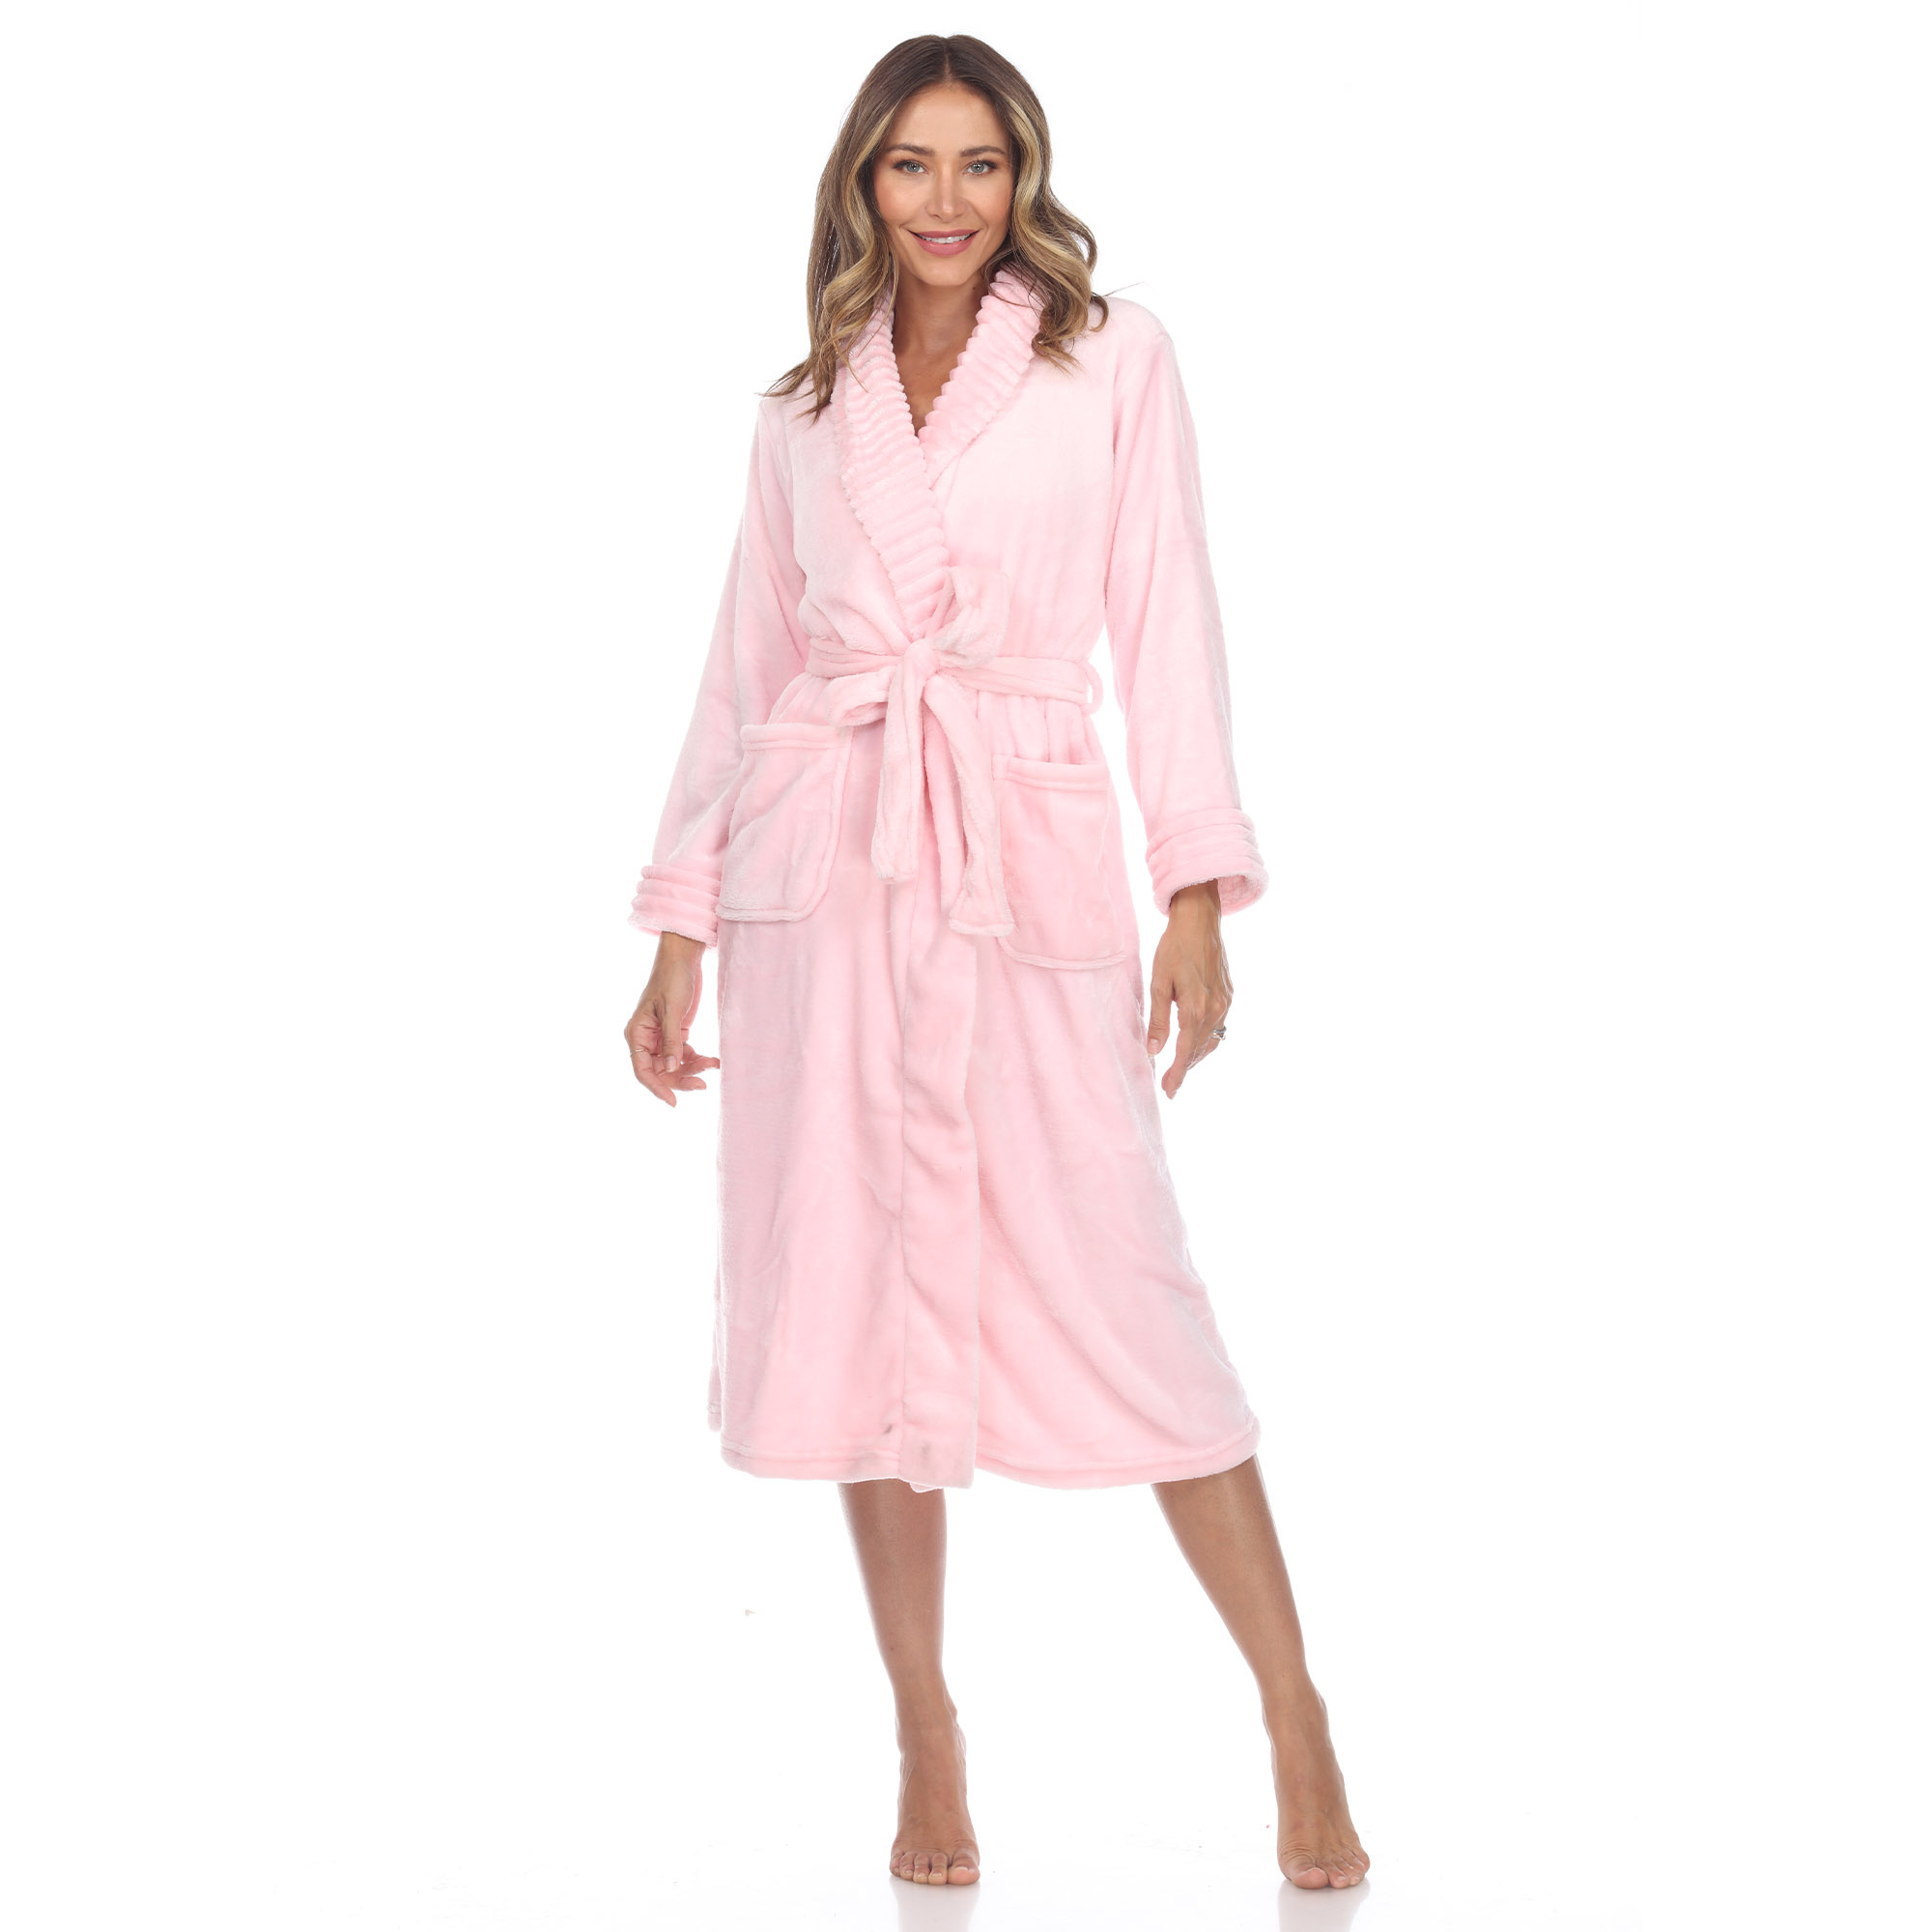 White Mark Women's Cozy Lounge Robe - Pink, S/M